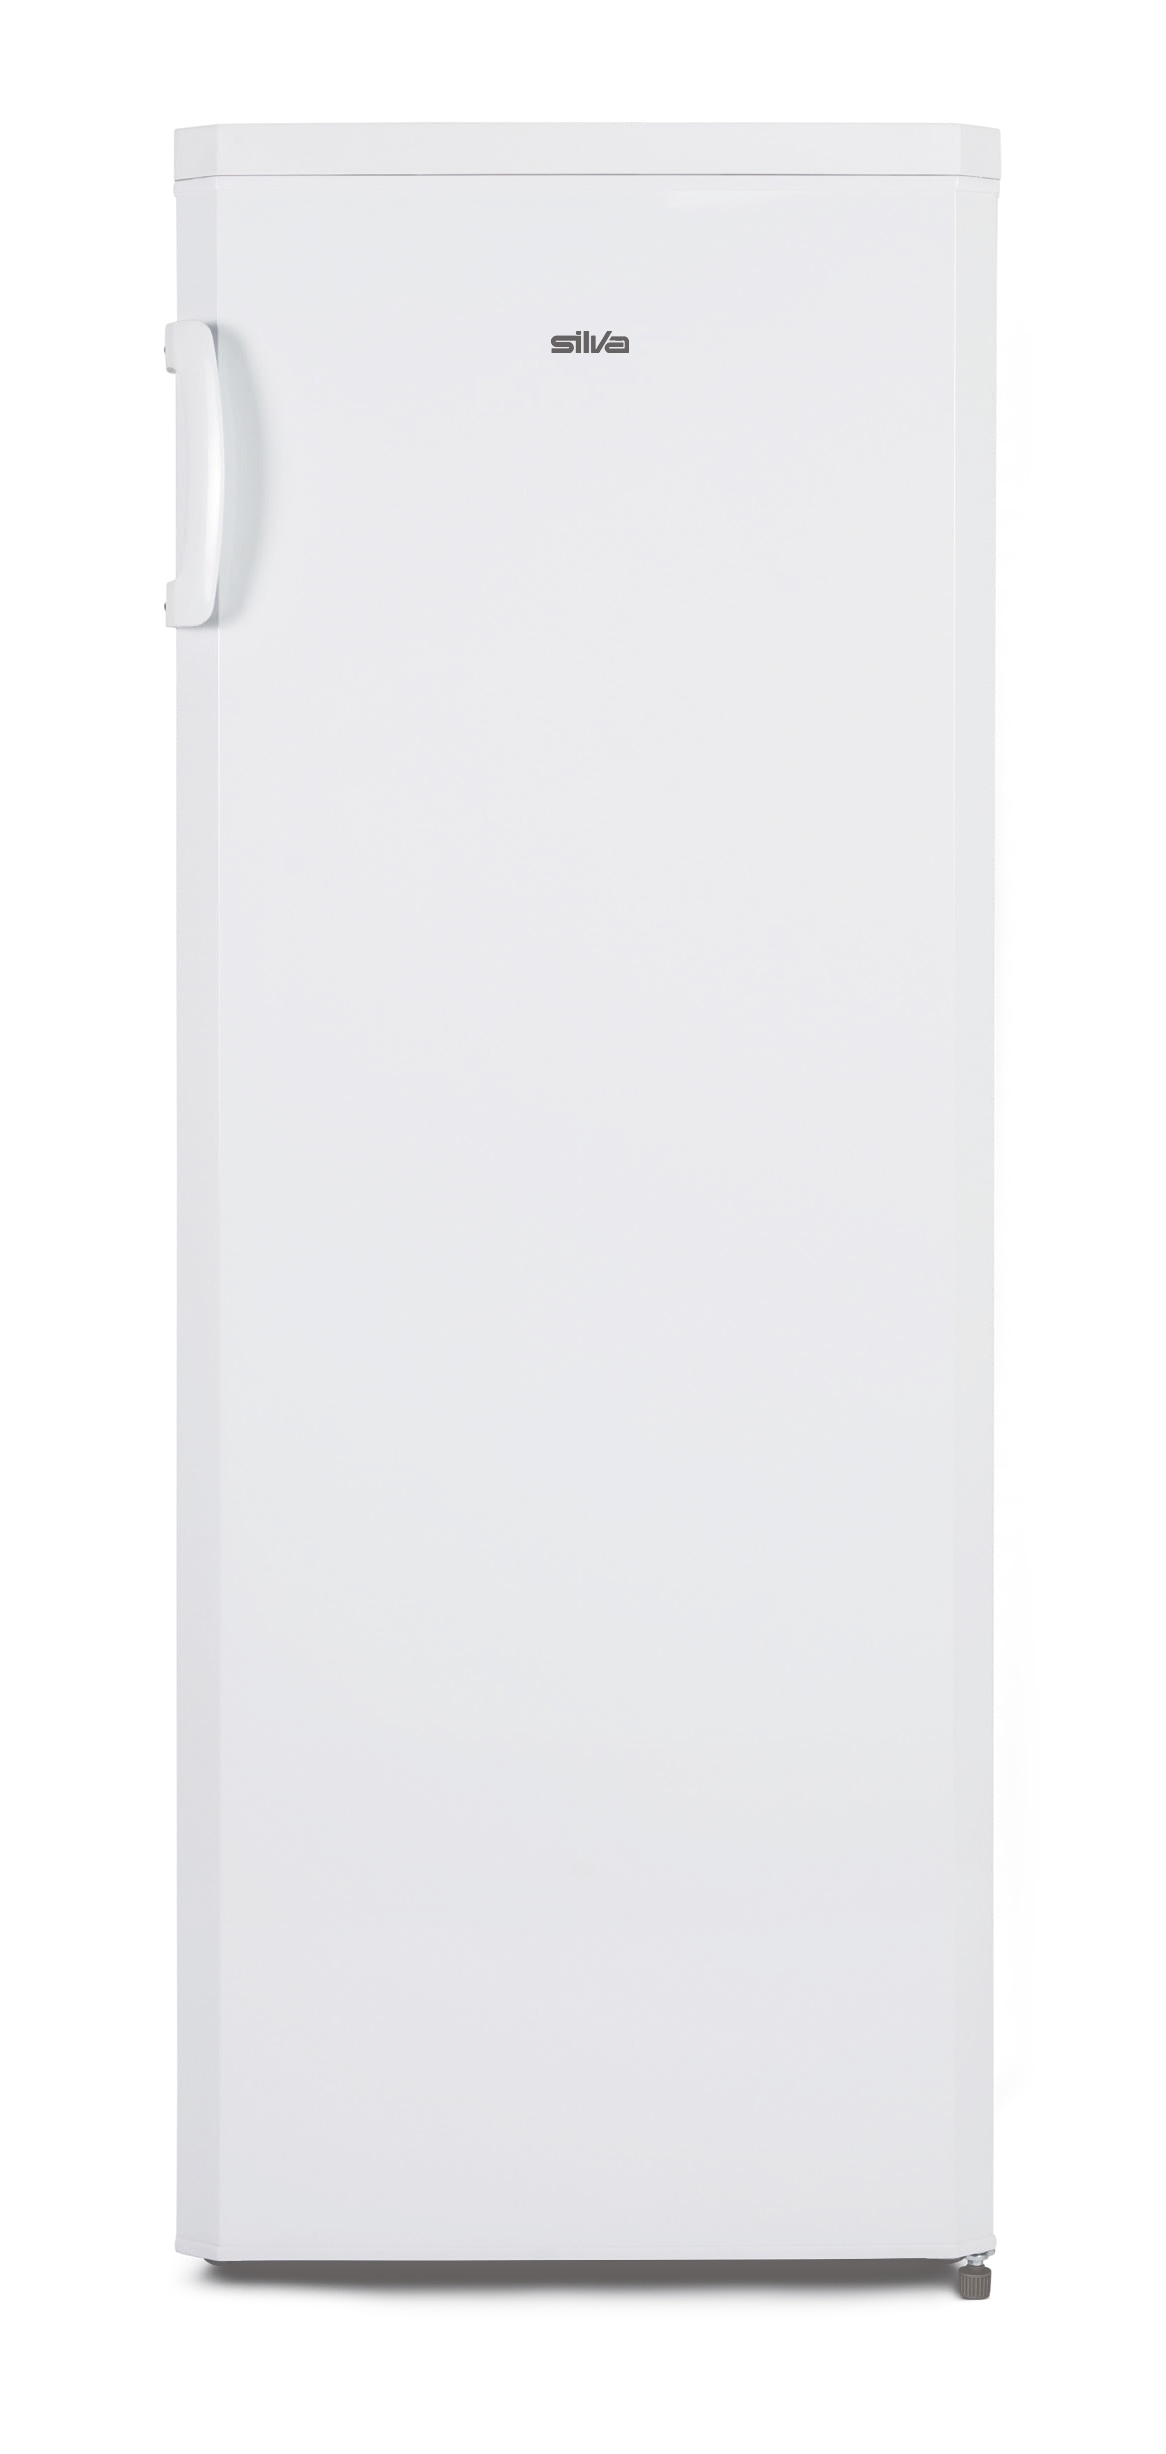 Silva Homeline Getränkekühlschrank »G-KS«, 2296, 143 cm hoch, 55 cm breit